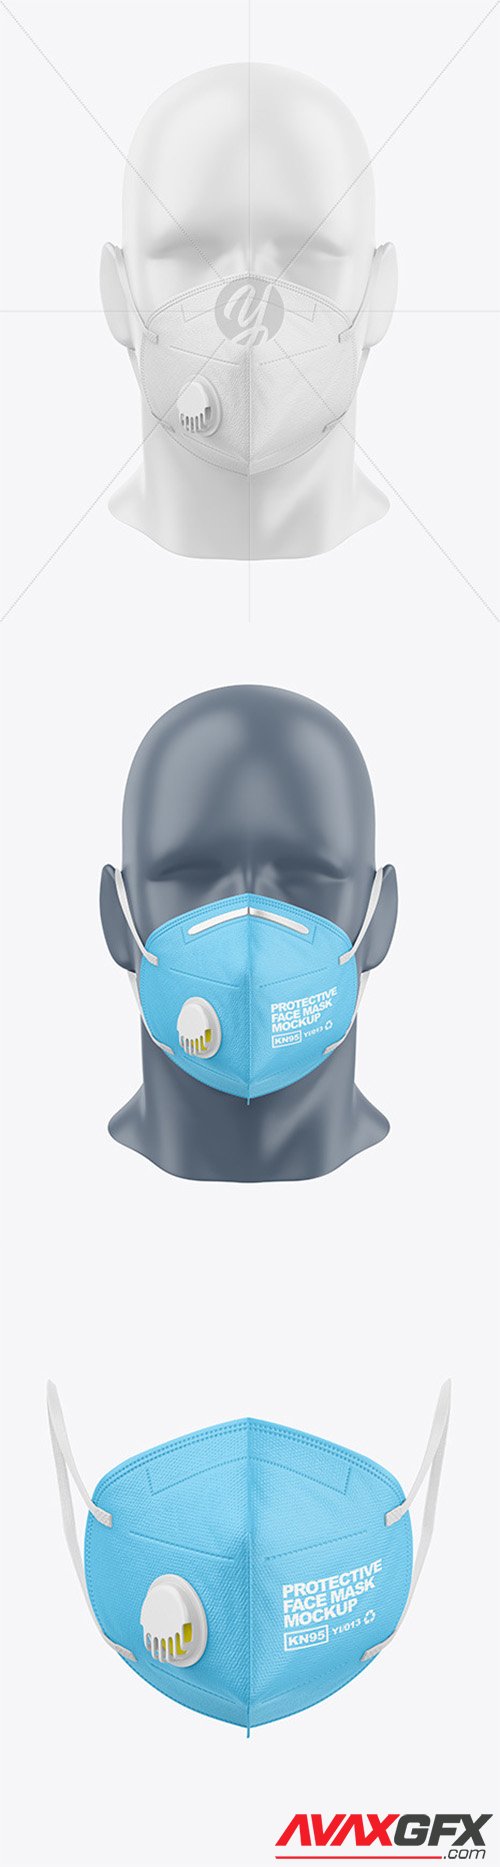 Protective Face Mask Mockup 80058